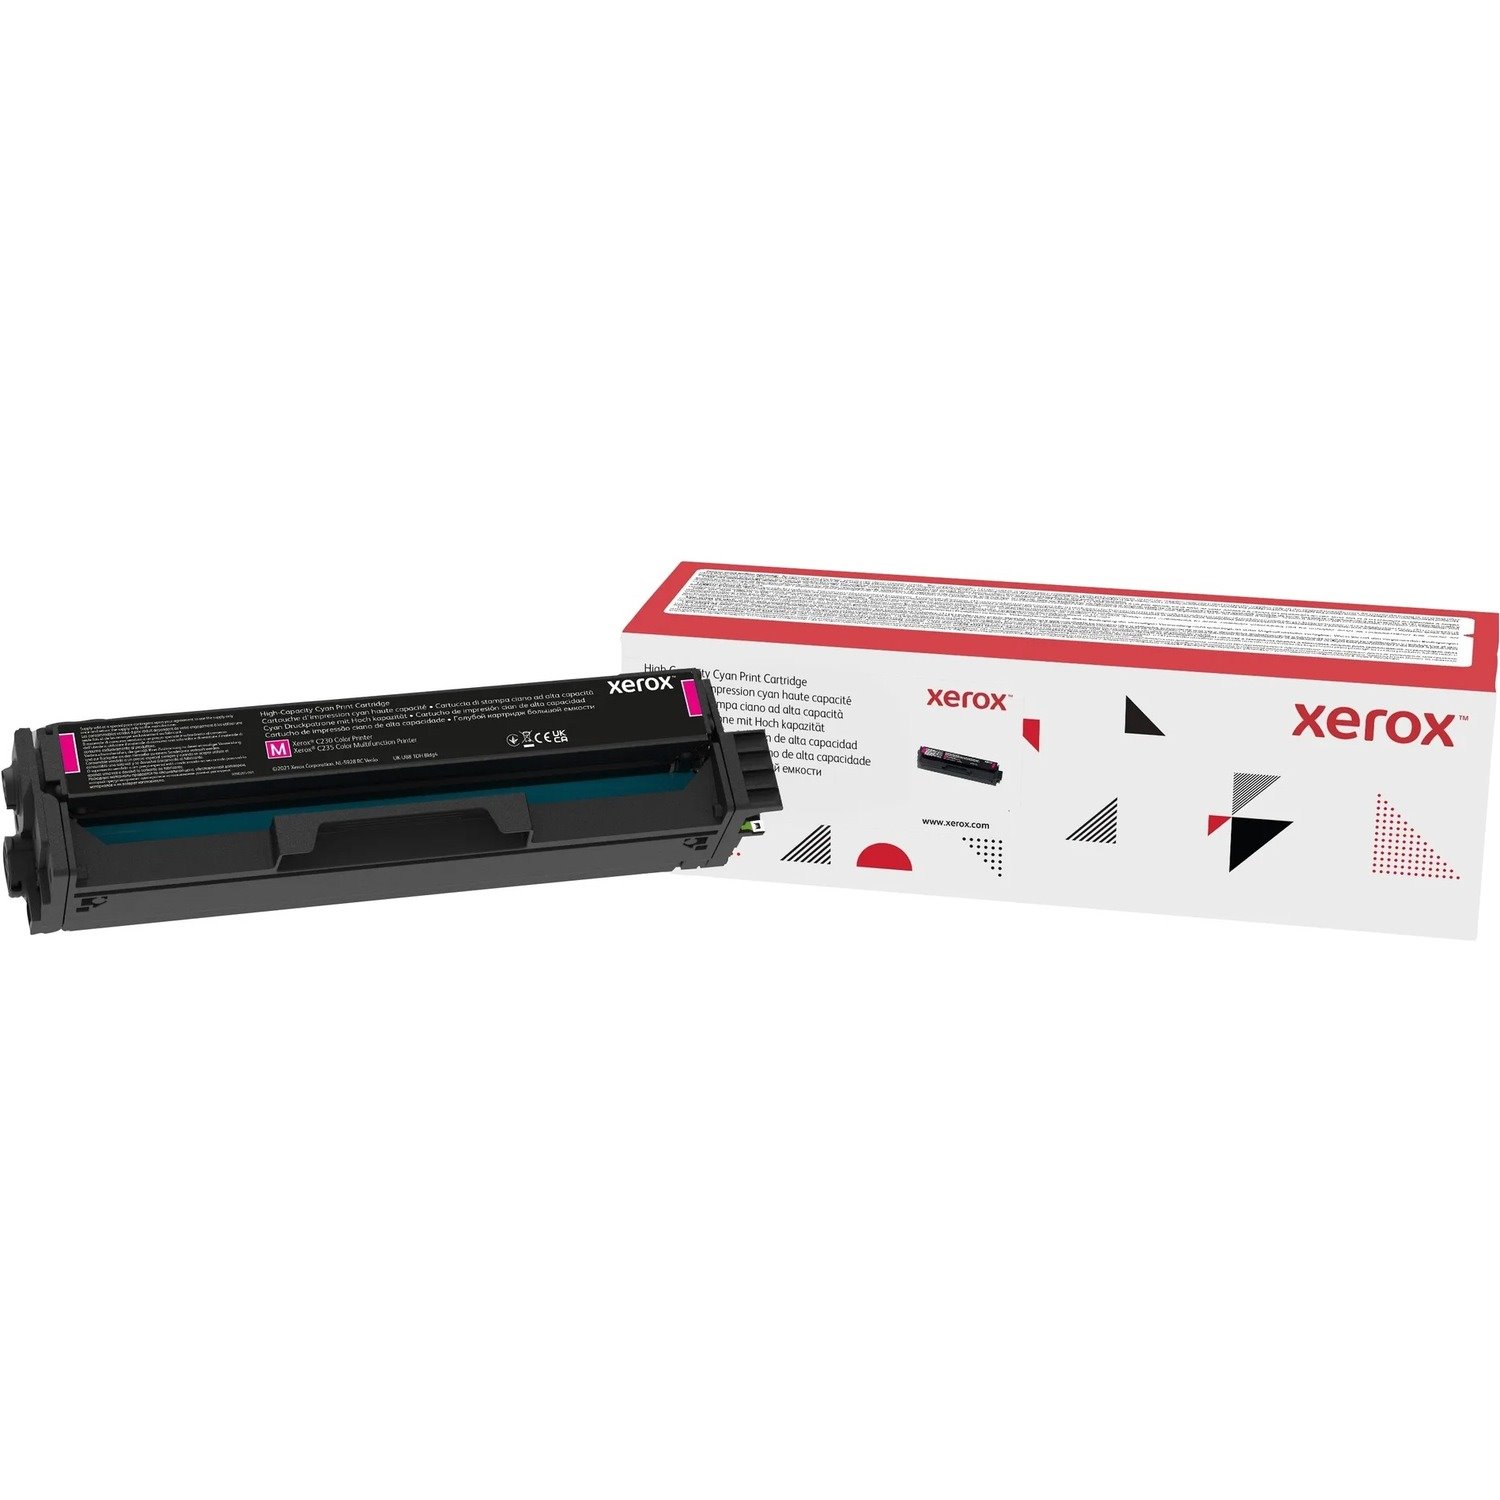 Xerox Original High Yield Laser Toner Cartridge - Magenta - 1 Pack